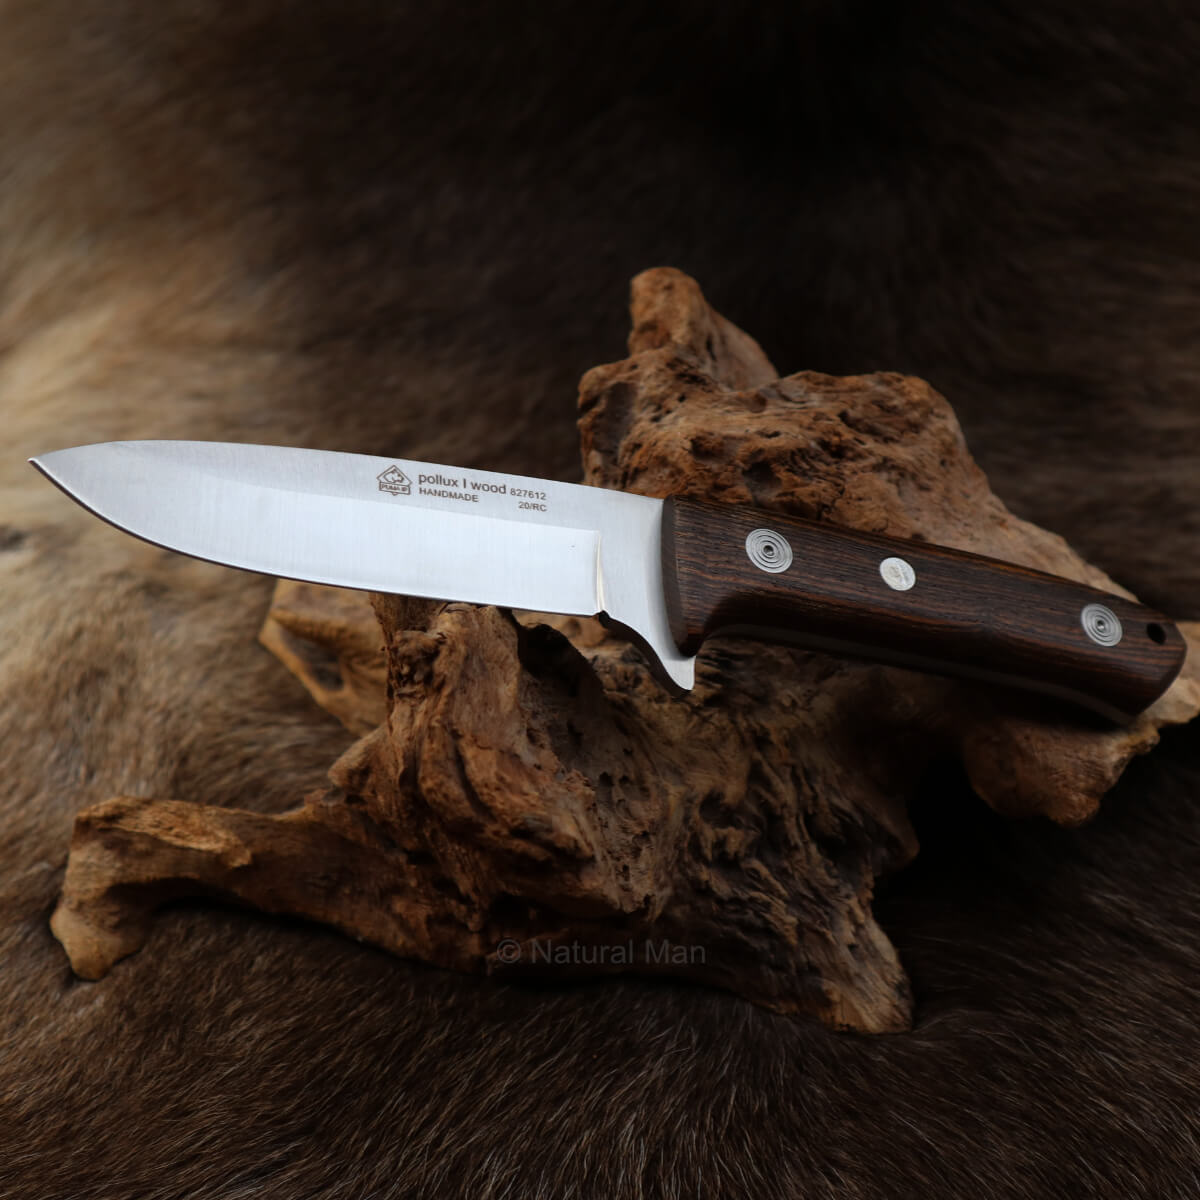 Puma IP Pollux I Bushcraft Knife